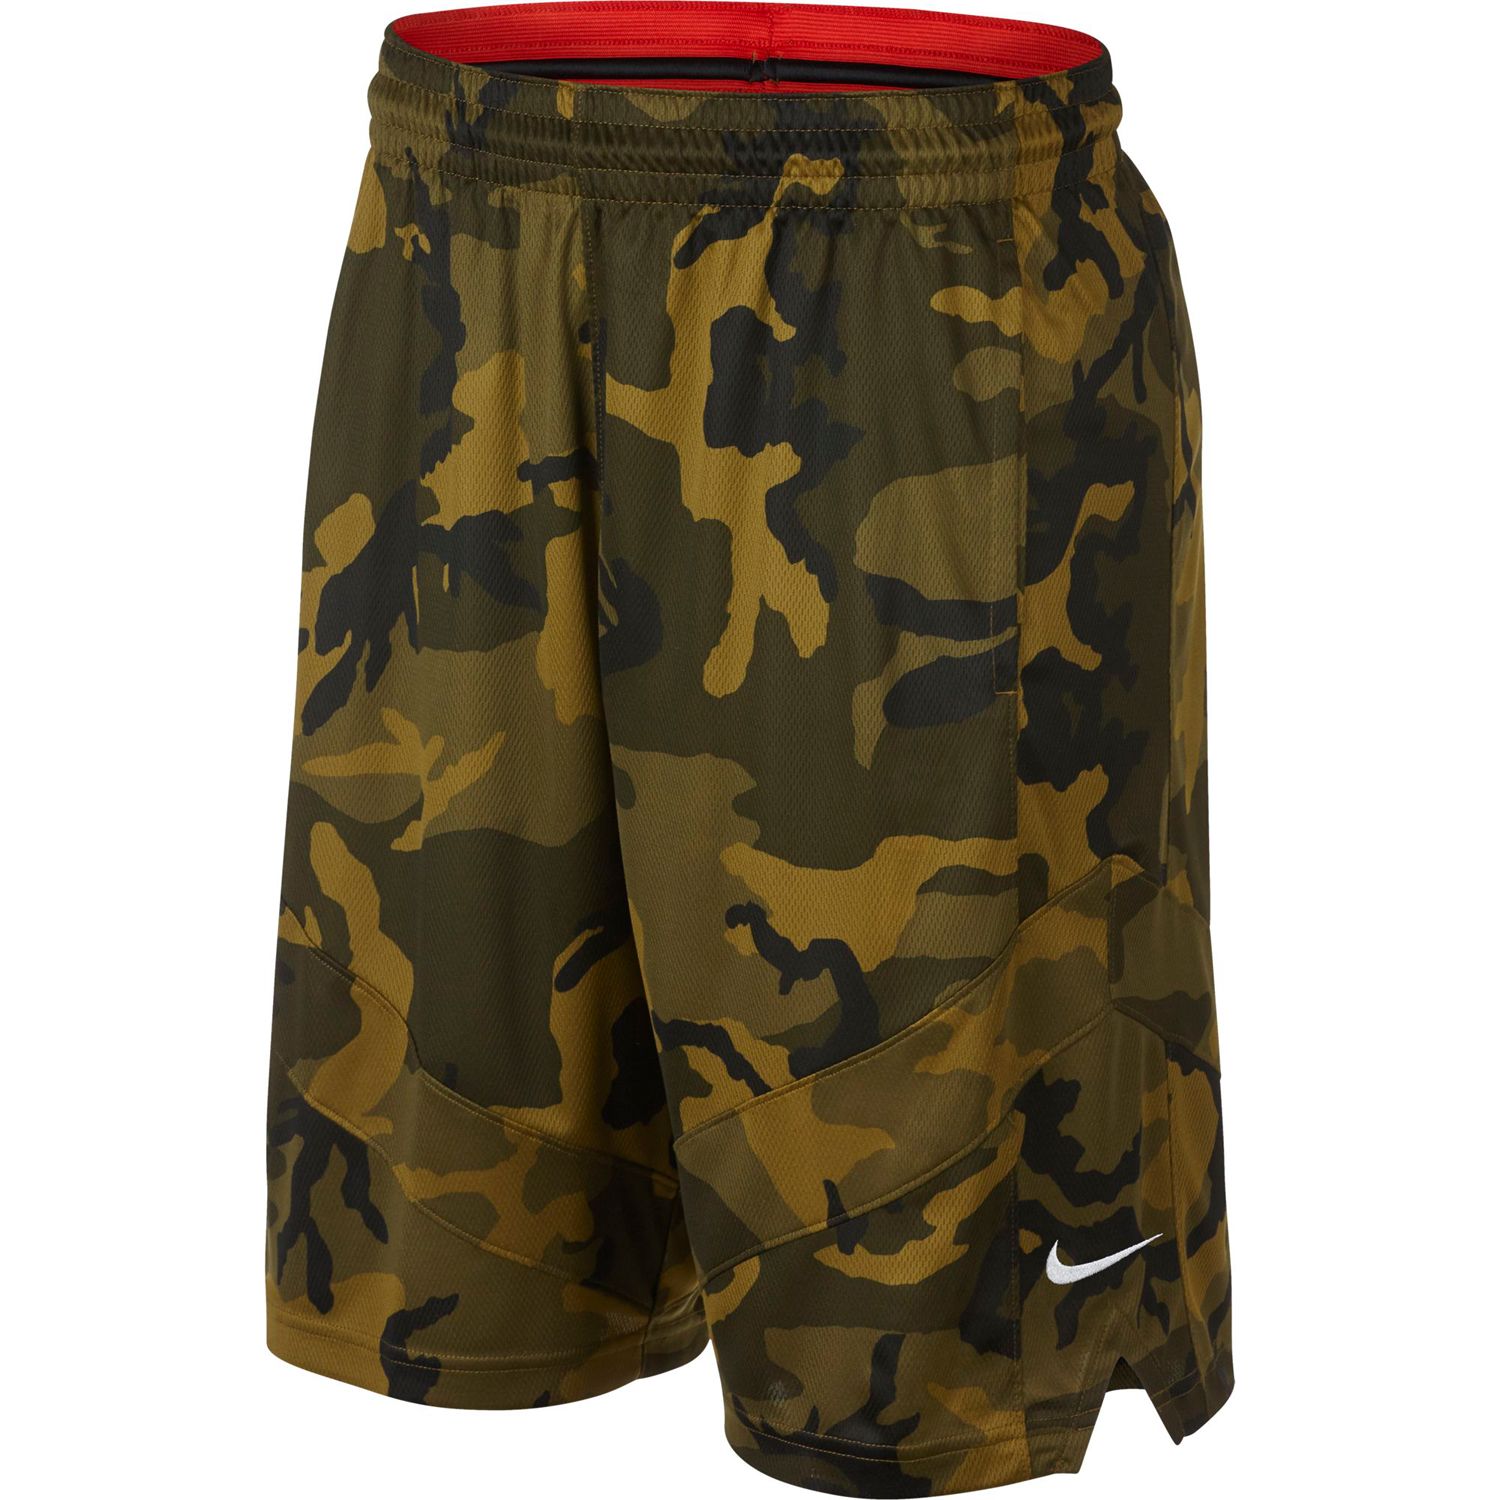 nike basketball shorts on sale